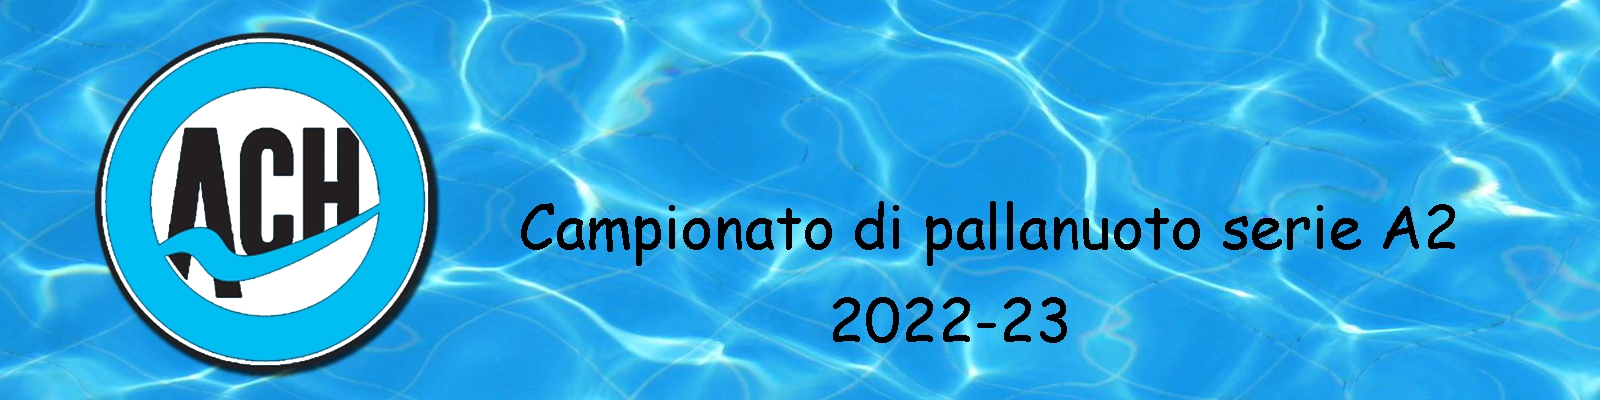 Acquachiara anno 2022-23